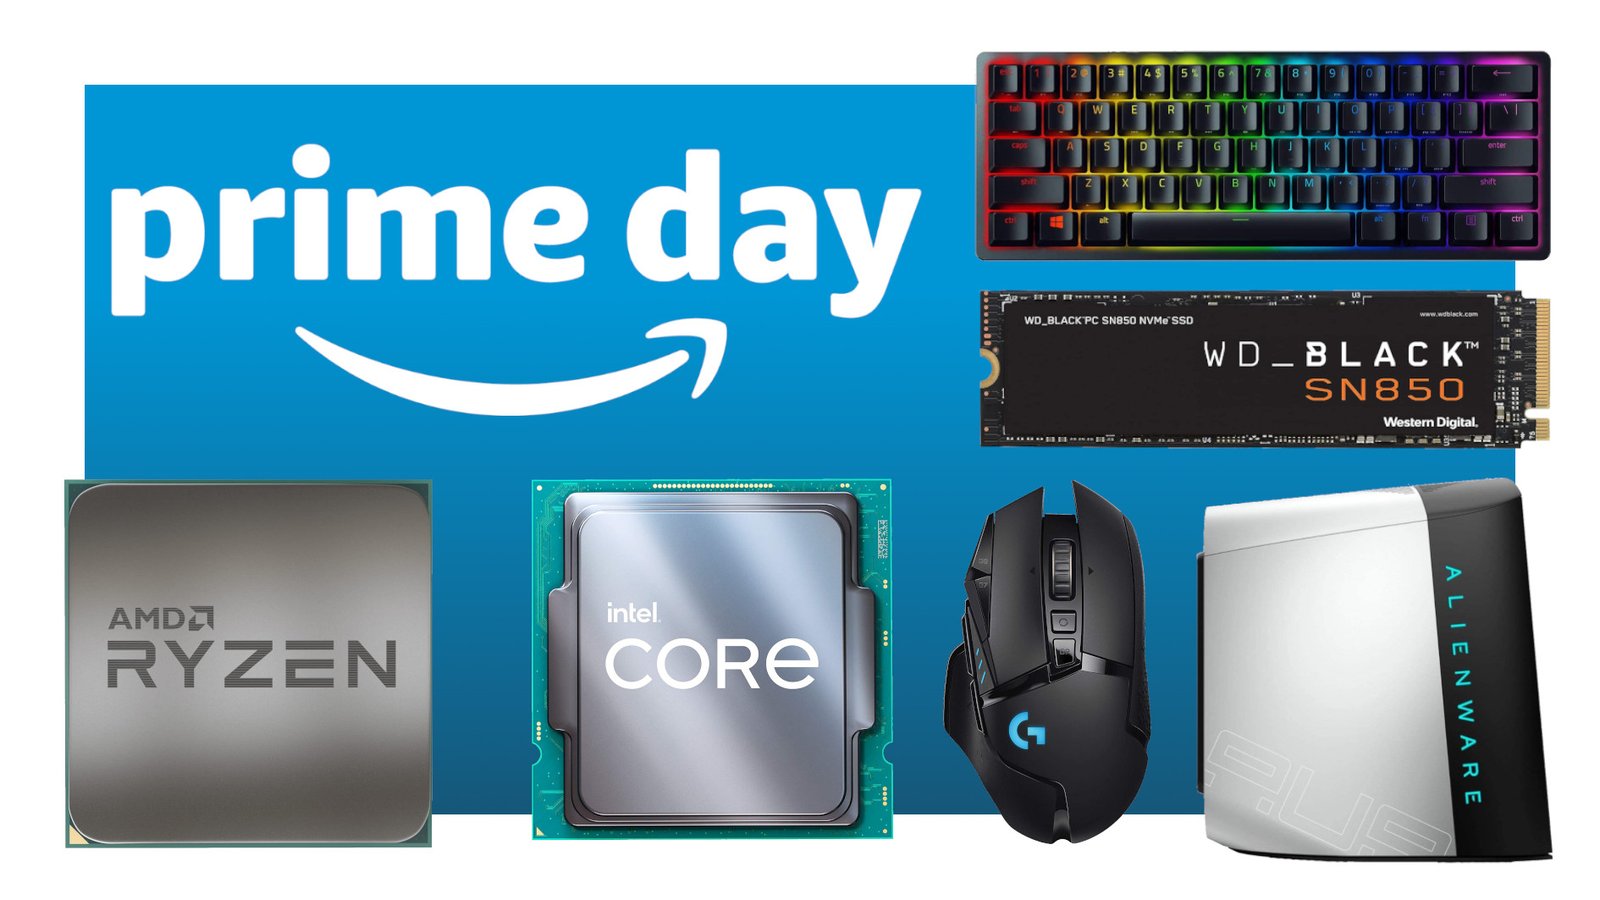 Amazon Prime Day homepage image